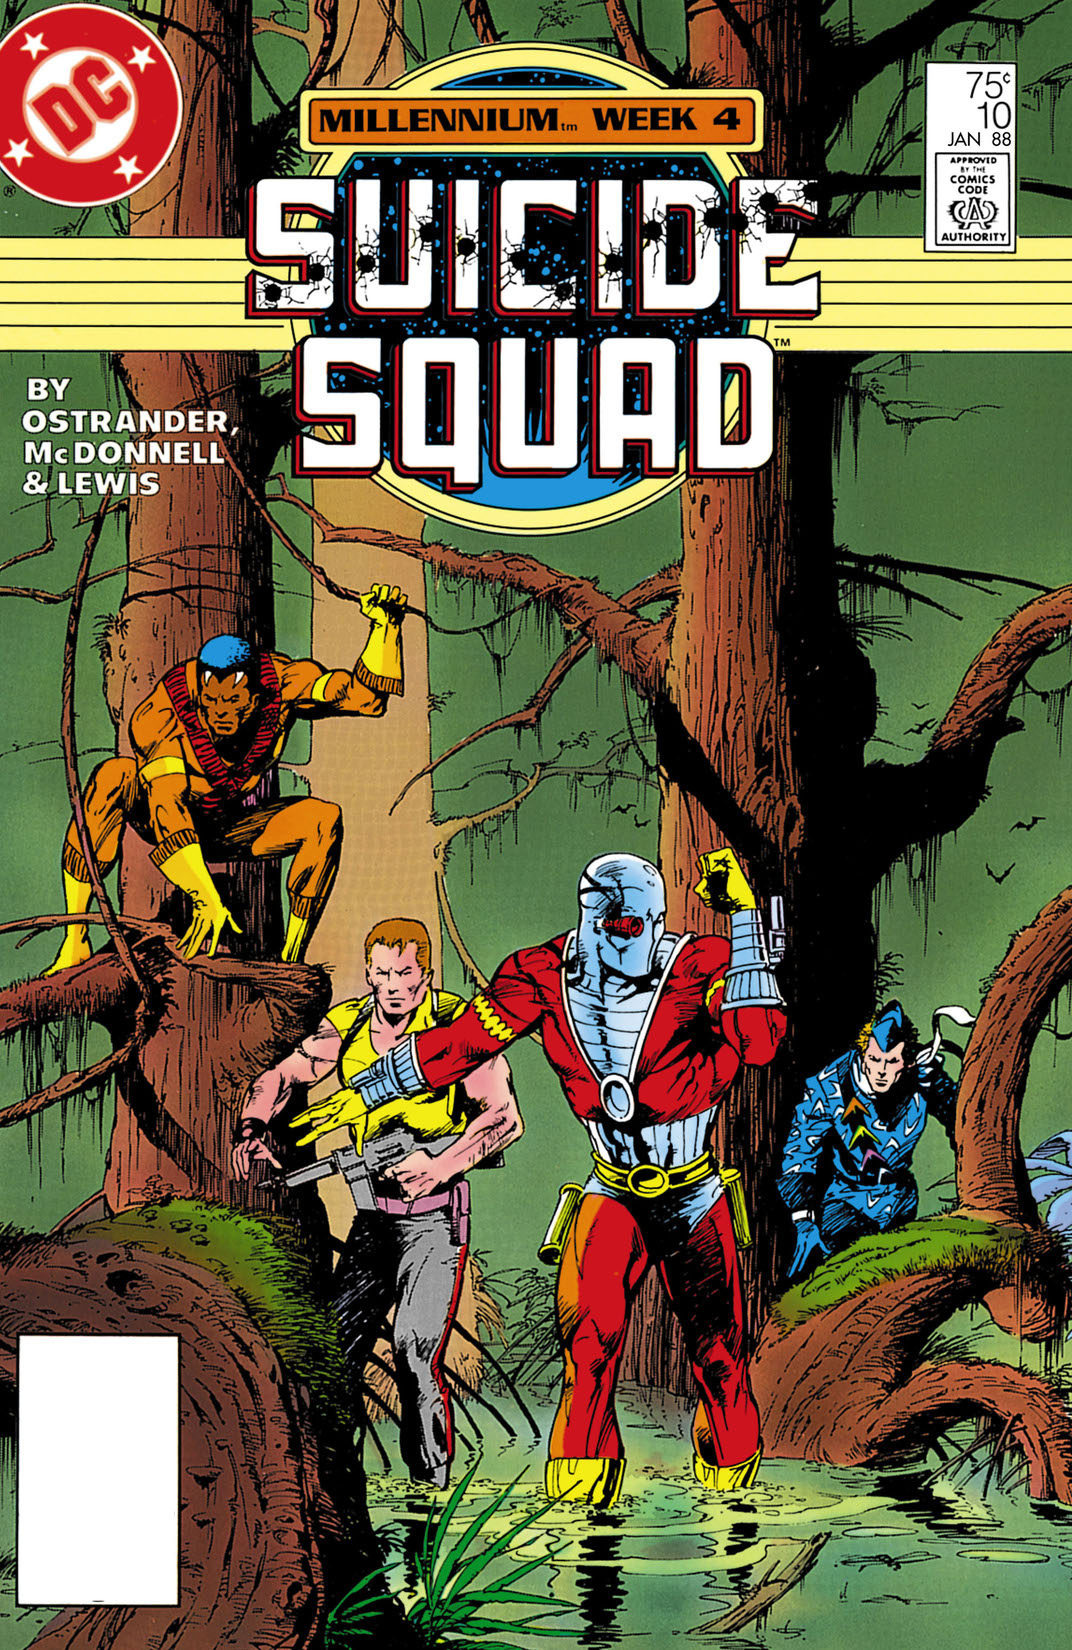 Suicide Squad (1987-) #9 preview images